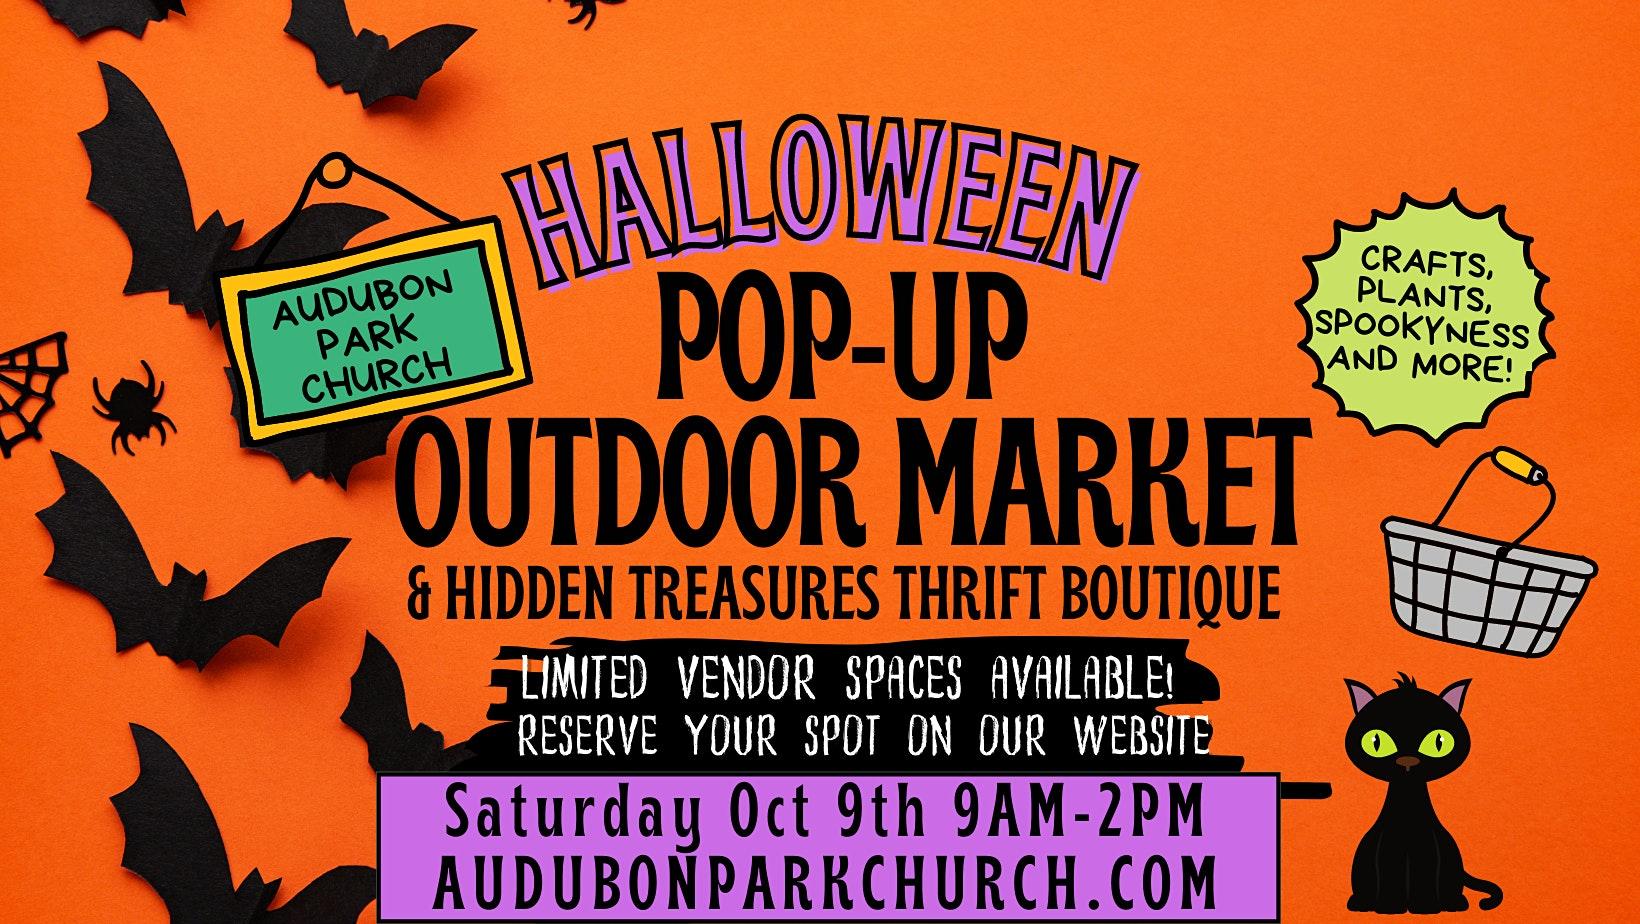 Halloween 2021 Outdoor Market Booth Space Rental at Audubon Park Church